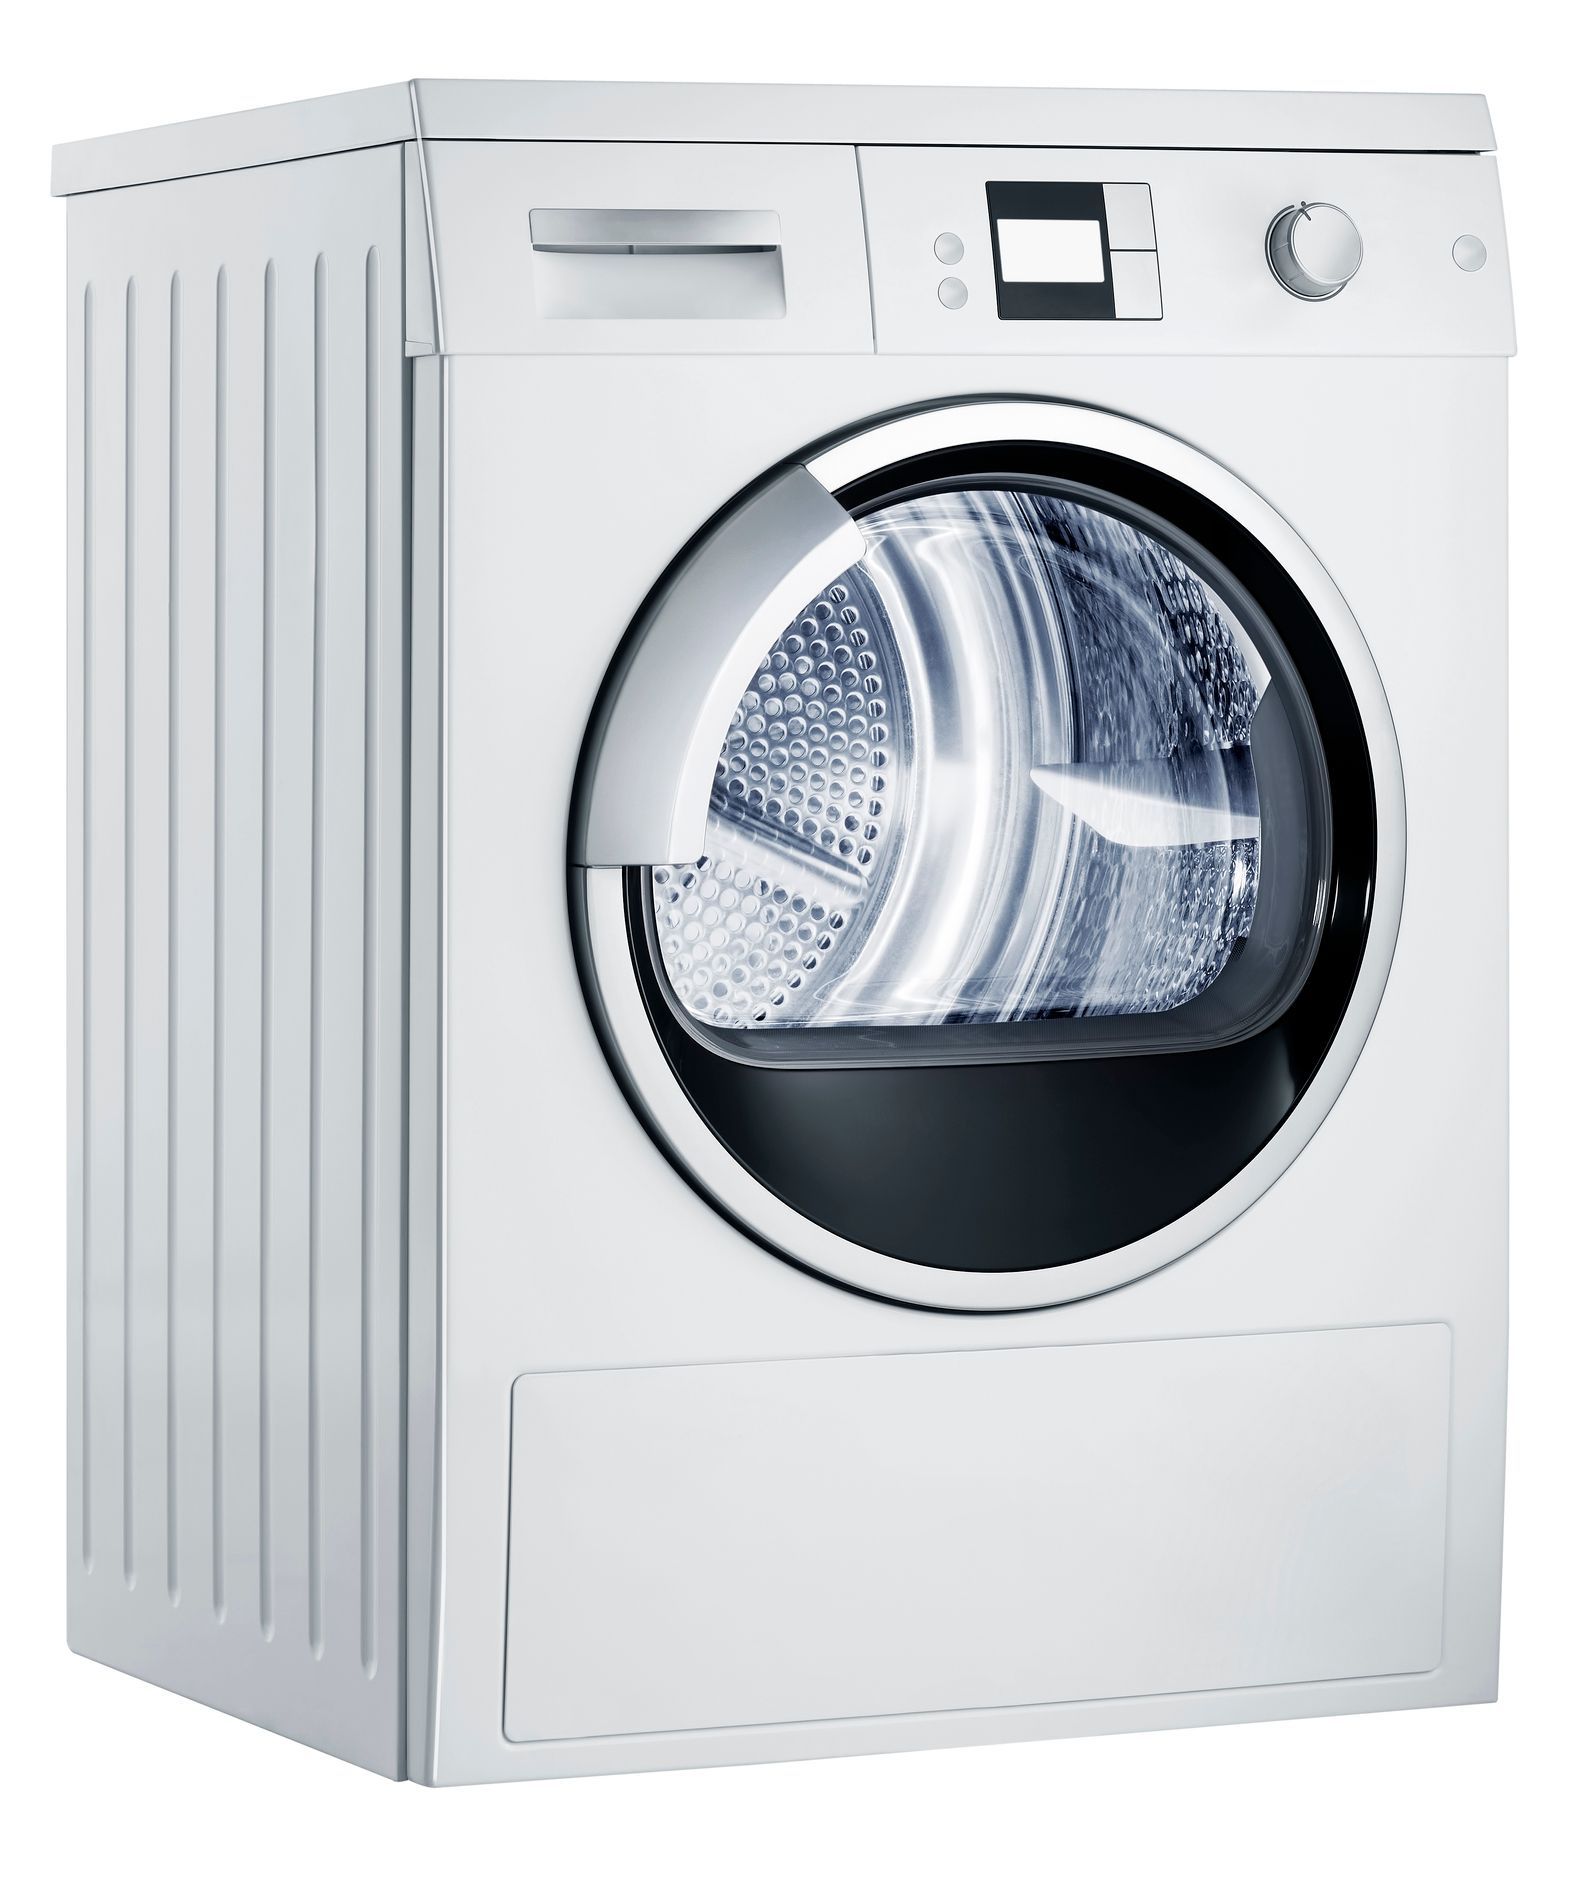 Washing Machine - Texarkana, AR - Reed's Appliance & Air Conditioning